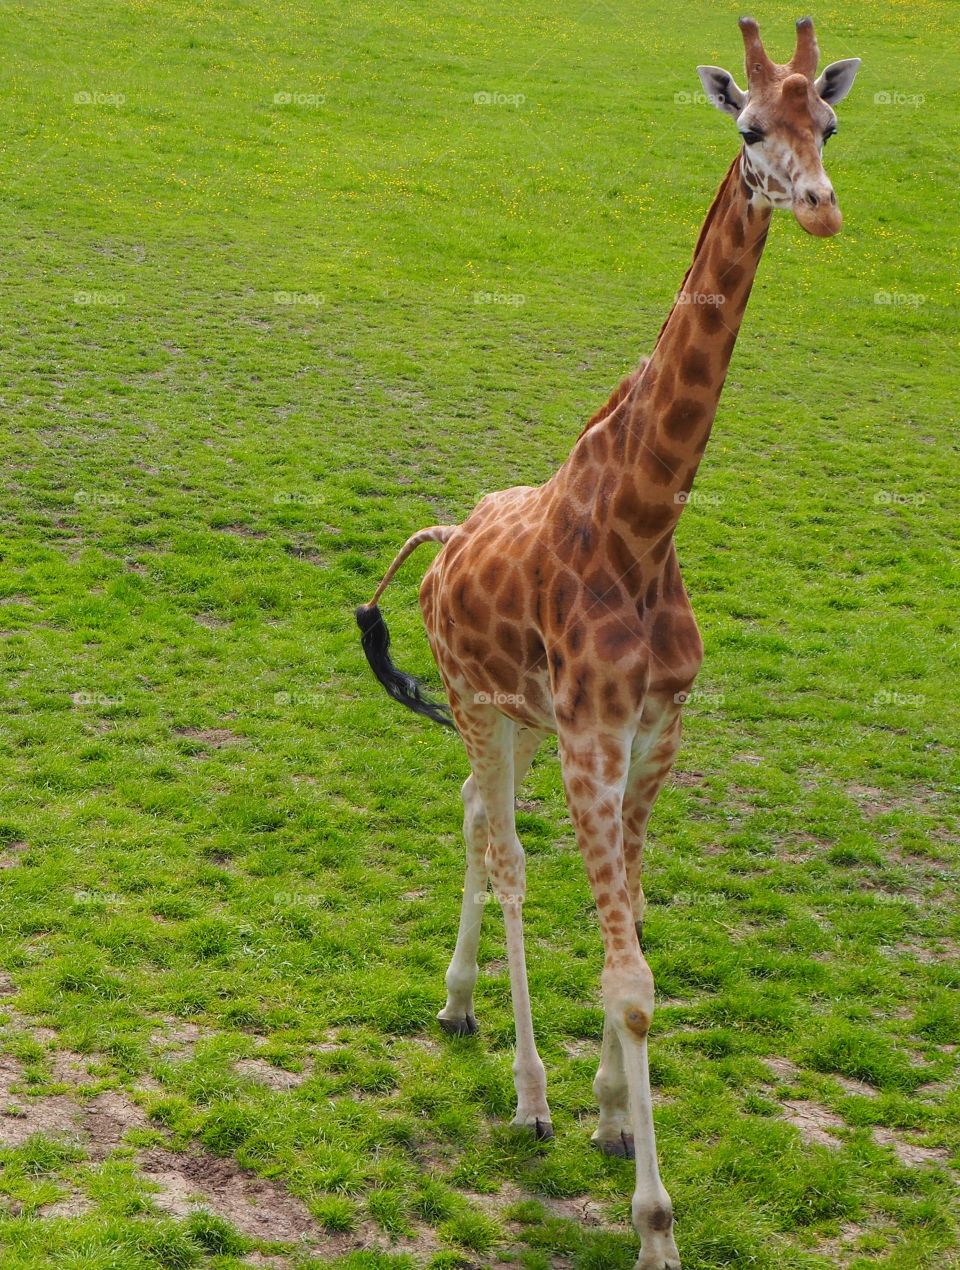 Giraffe walking to find food